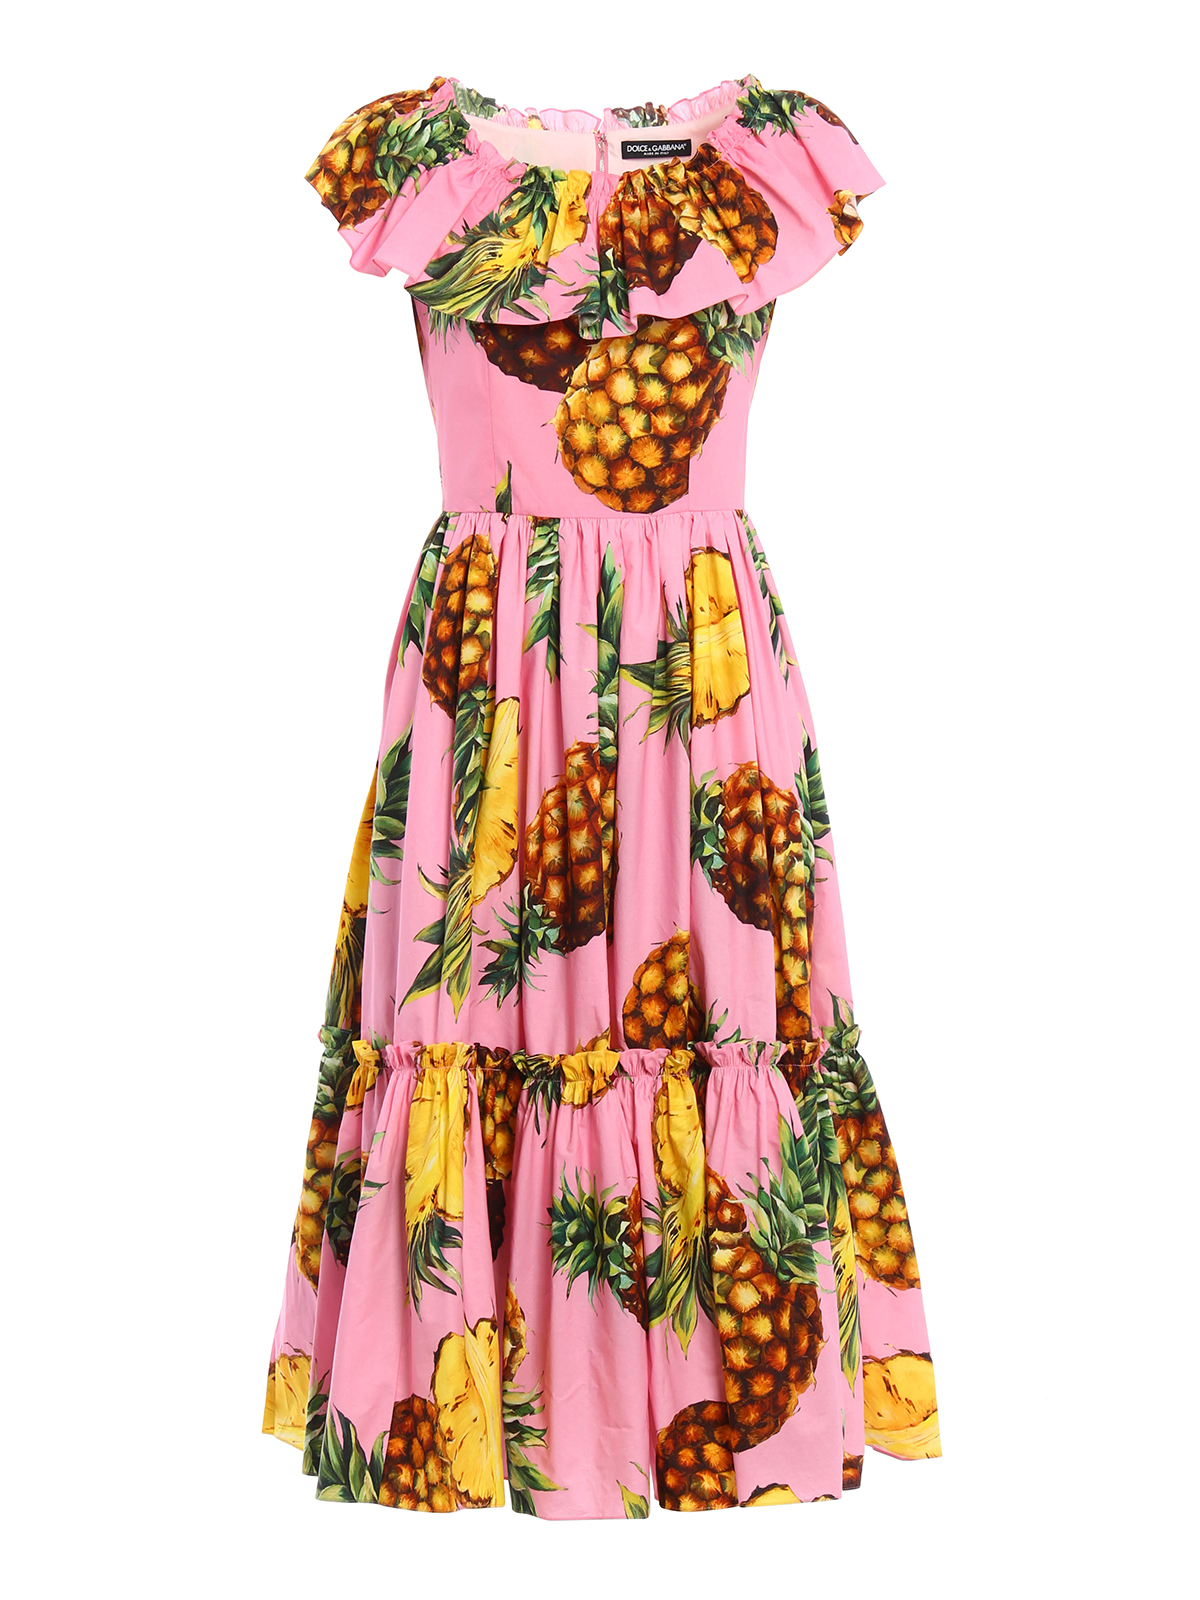 dolce and gabbana pineapple dress